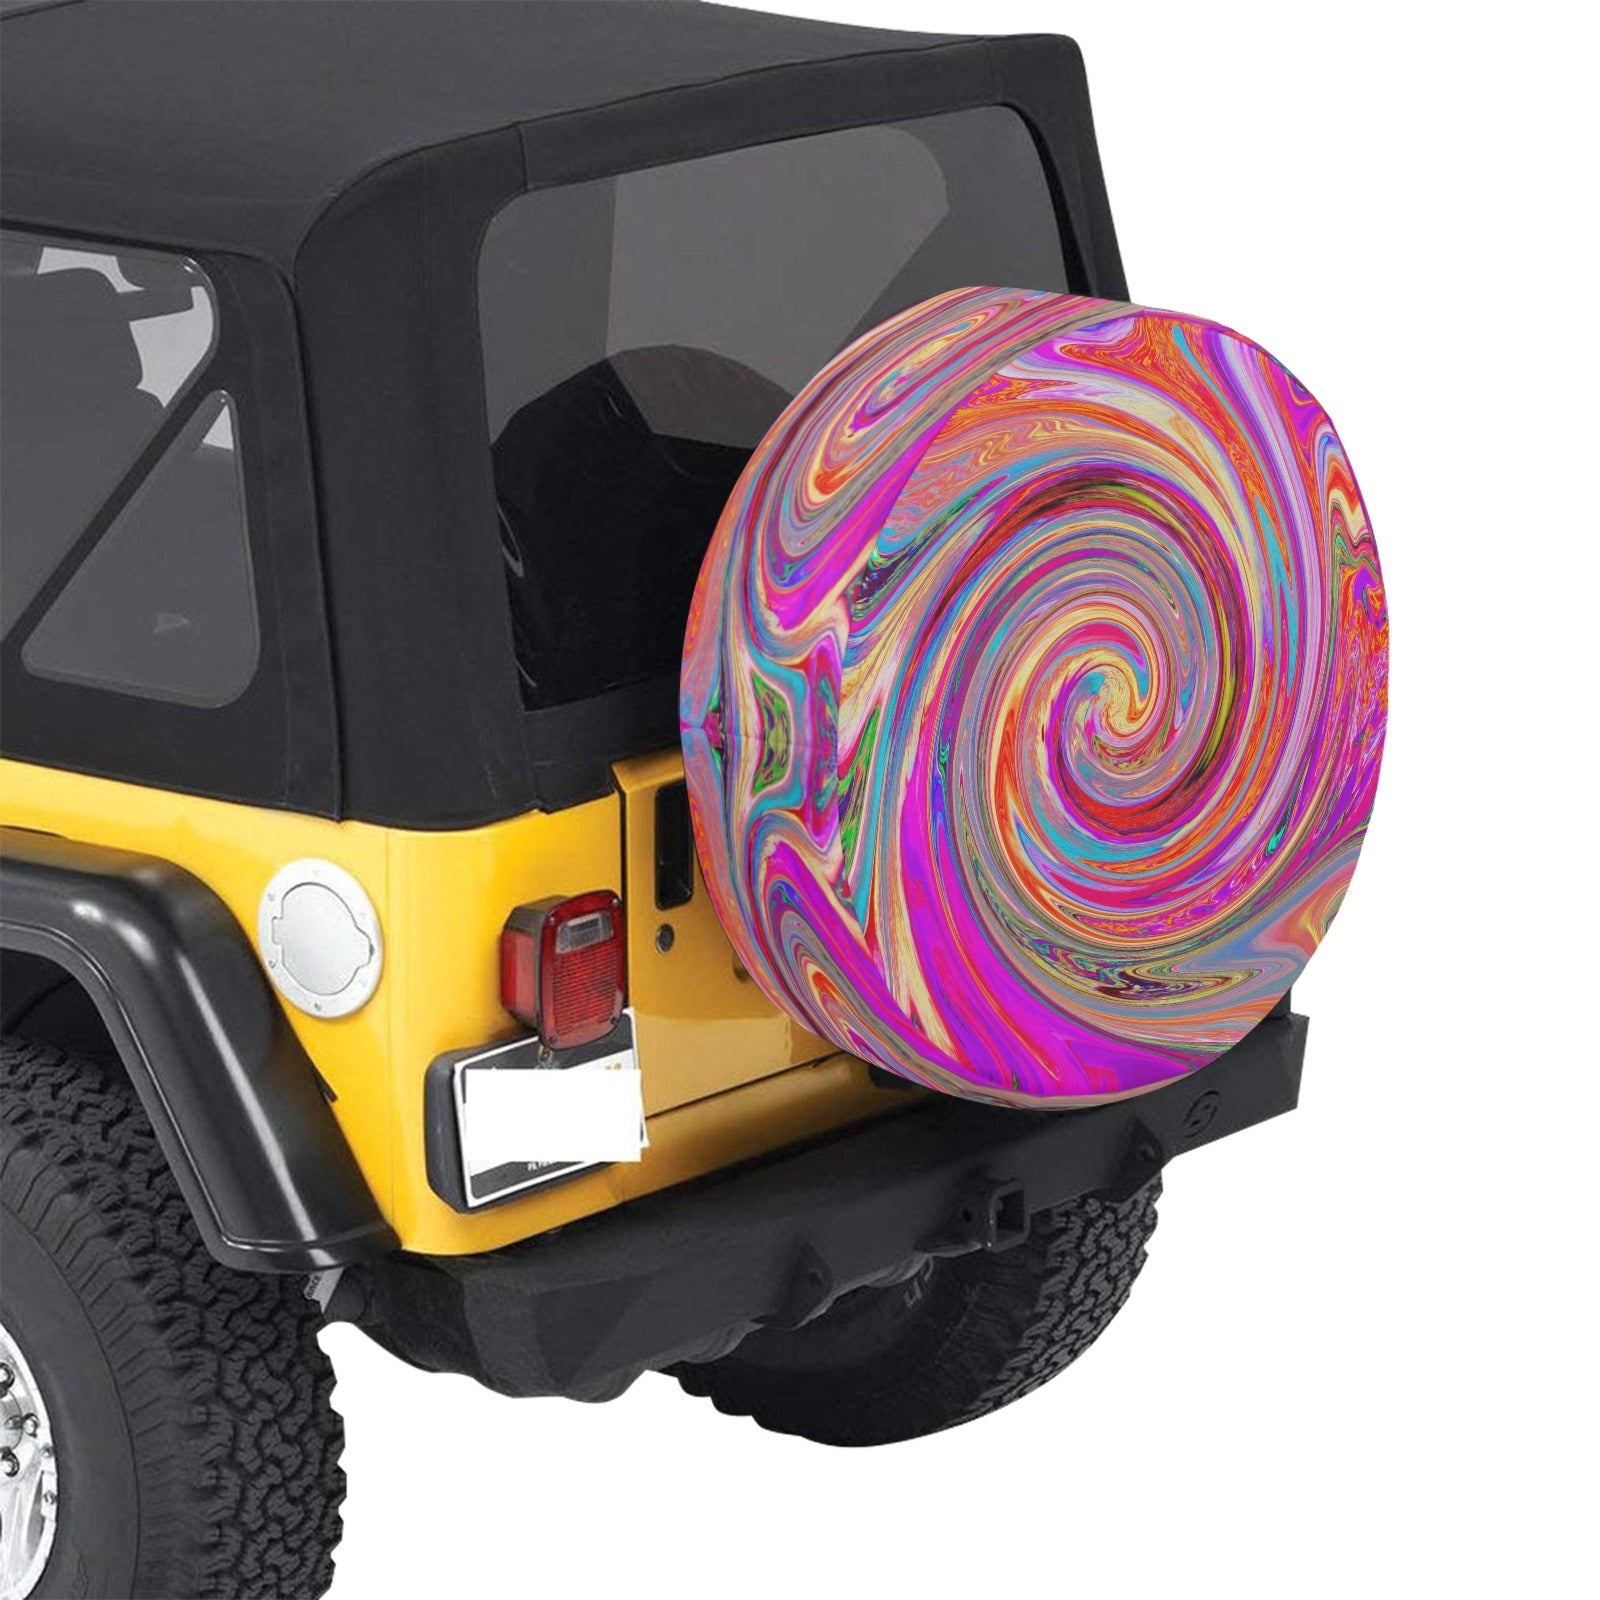 Spare Tire Covers, Colorful Rainbow Swirl Retro Abstract Design - Small